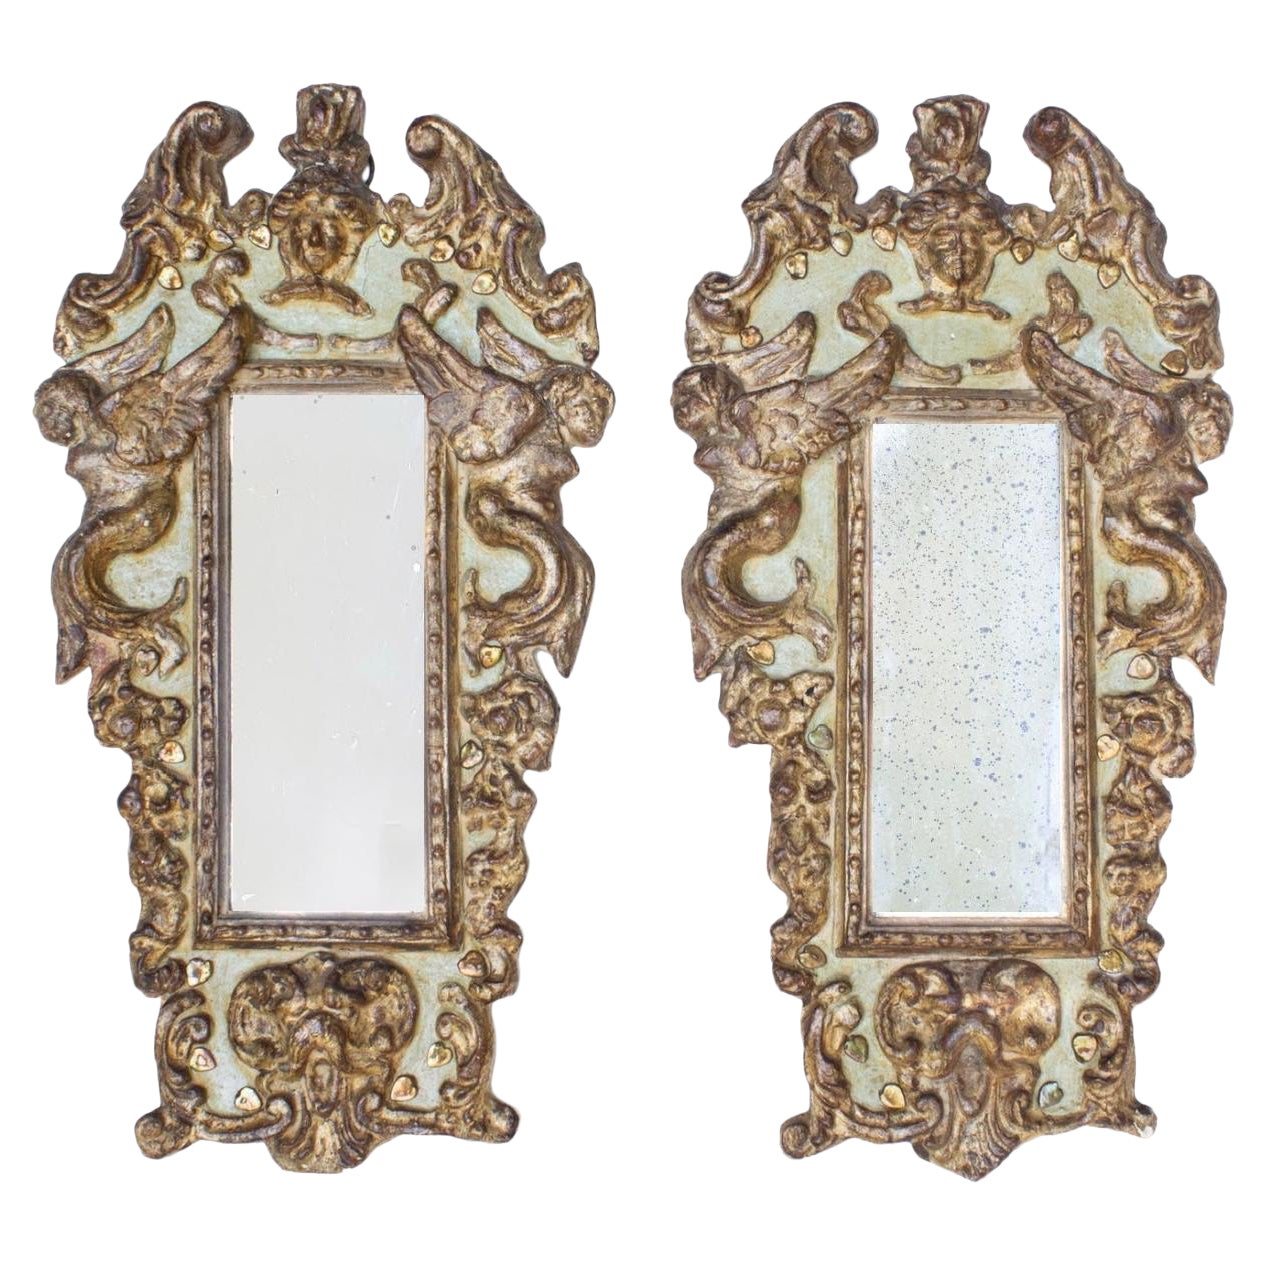 Pair of 18th Century Italian Rococo Green and Gilded Cherub Mirrors